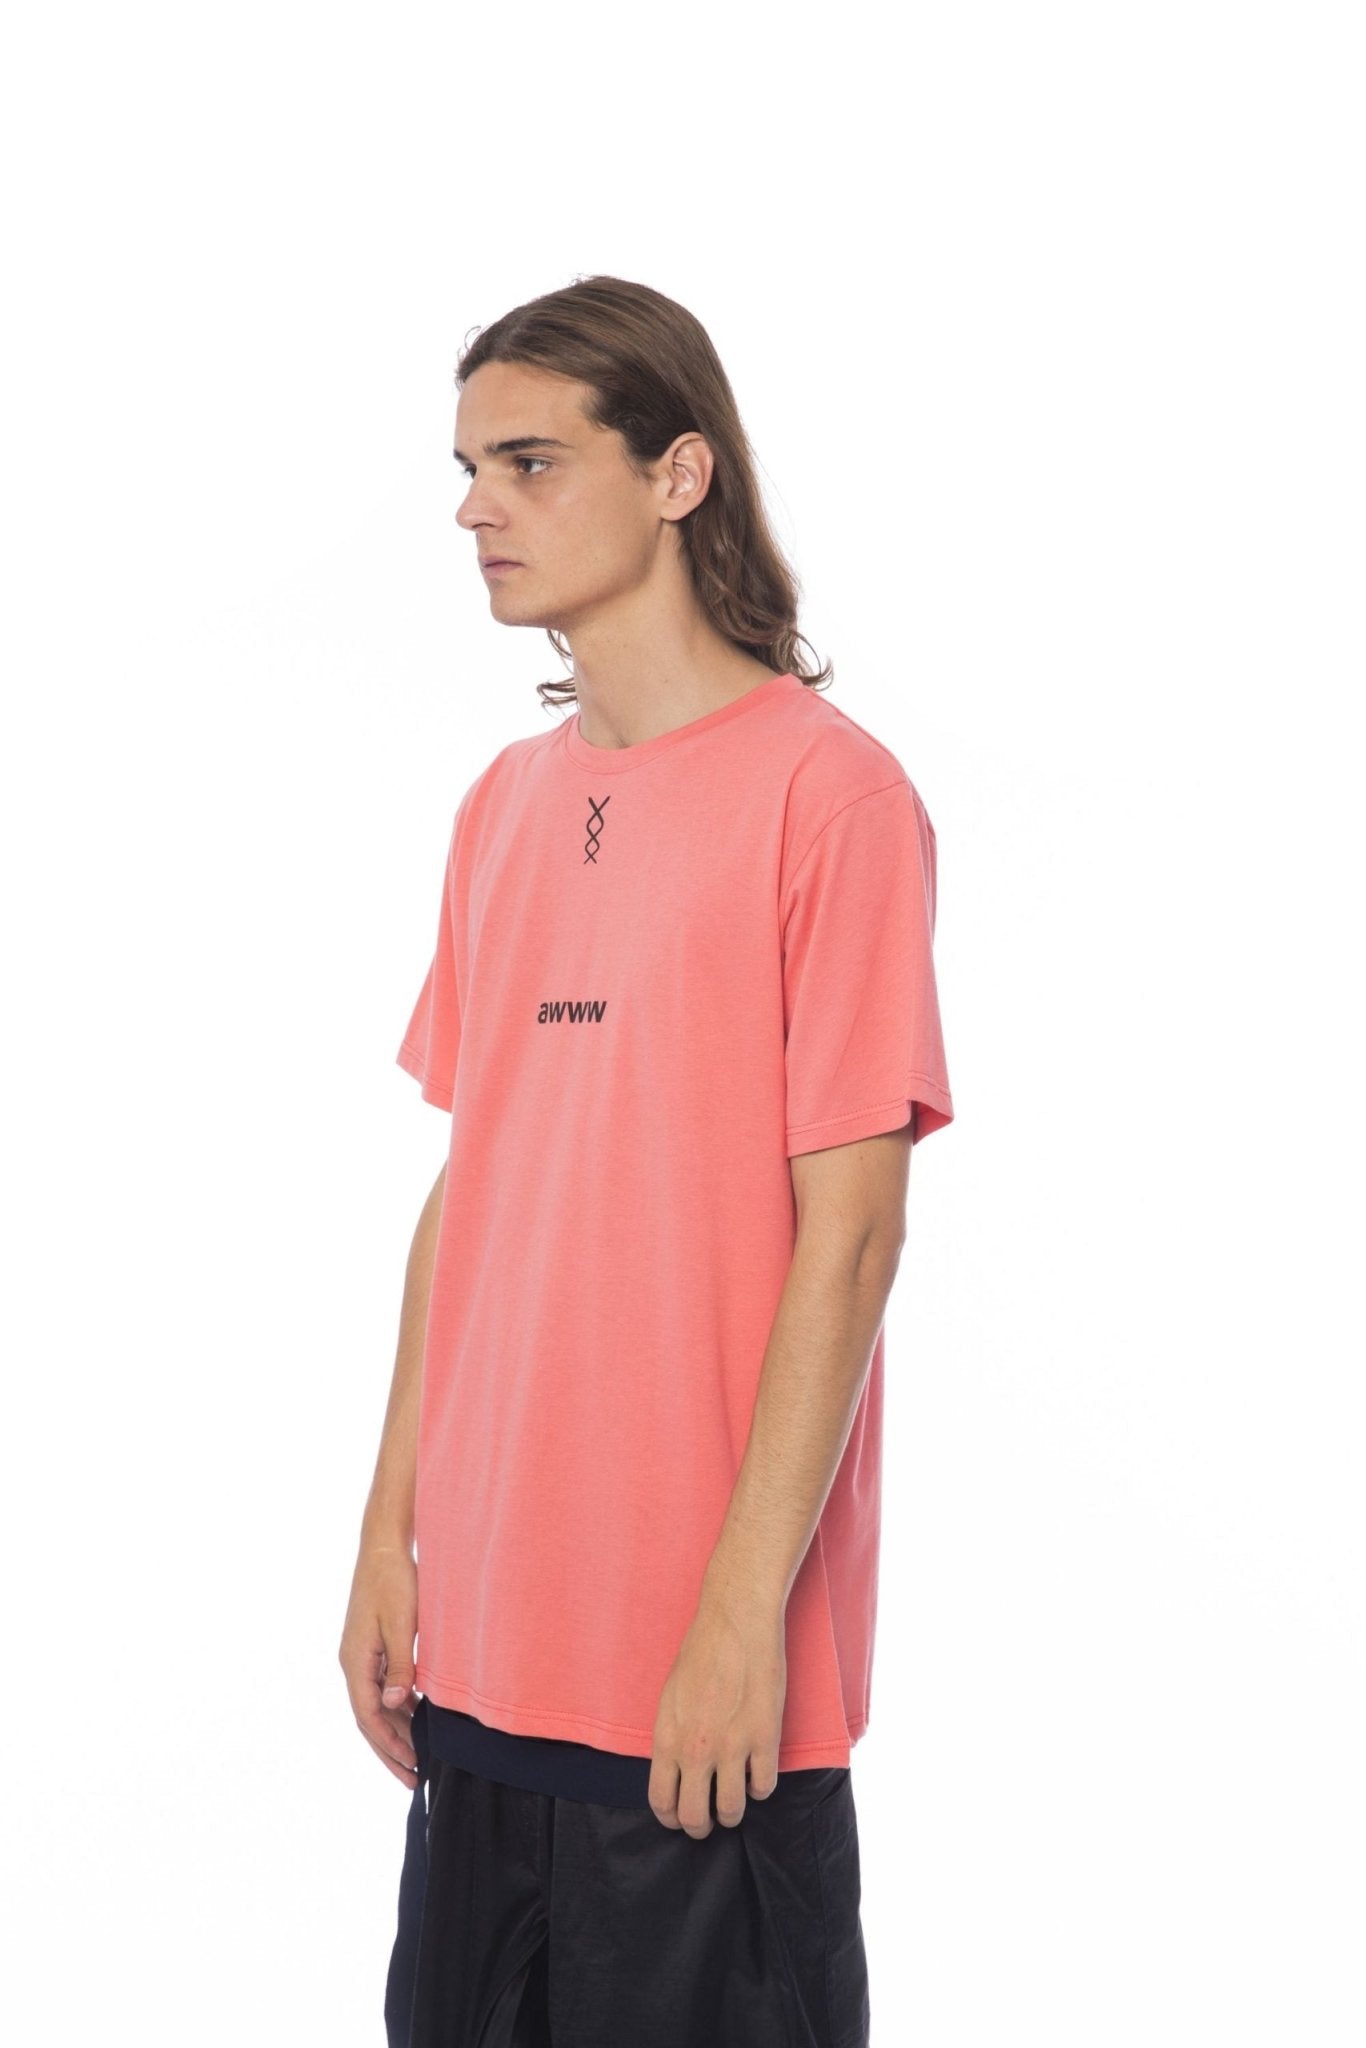 Nicolo Tonetto Pink Cotton T-Shirt - Fizigo